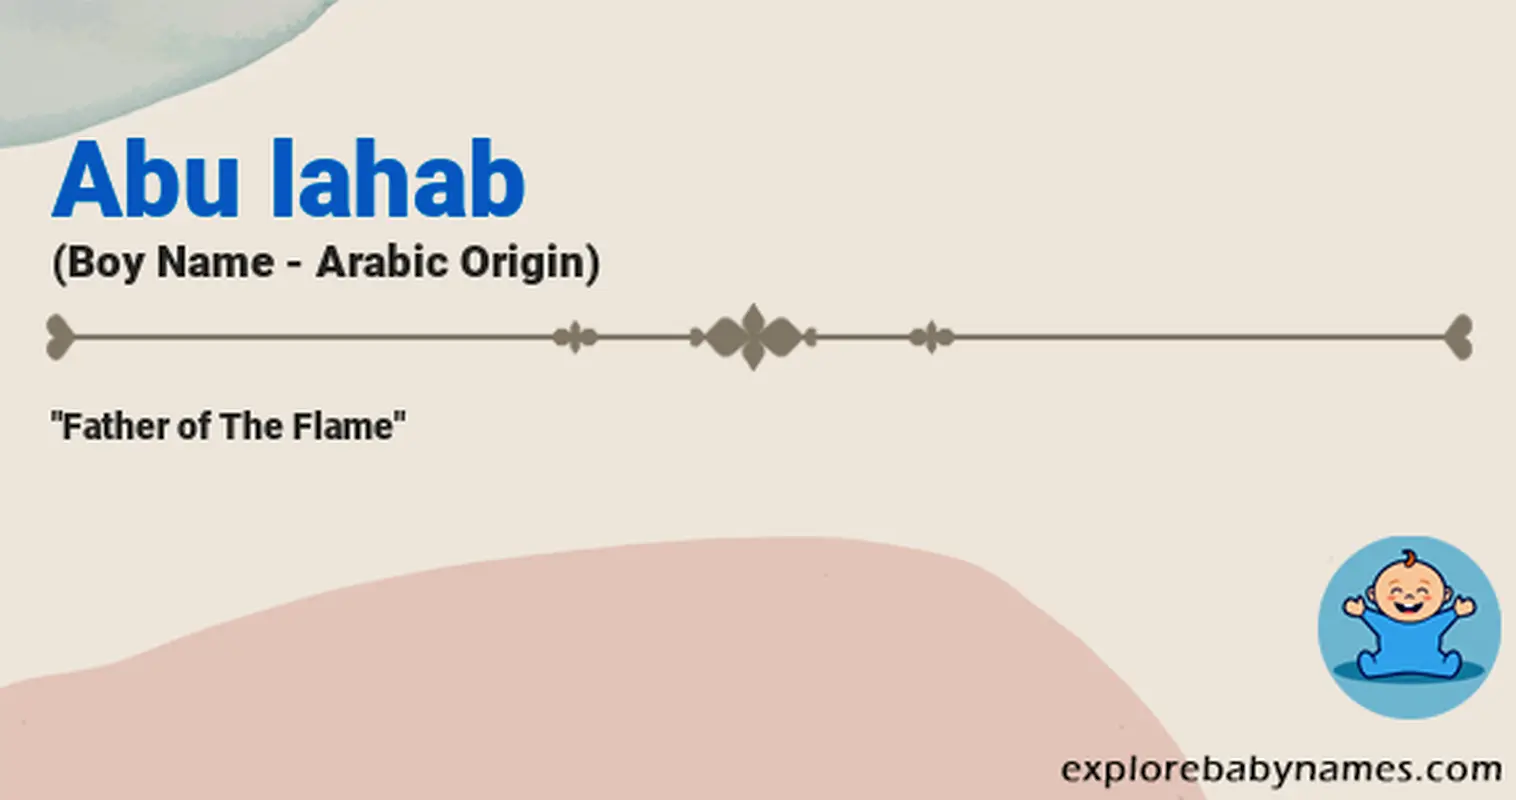 Meaning of Abu lahab